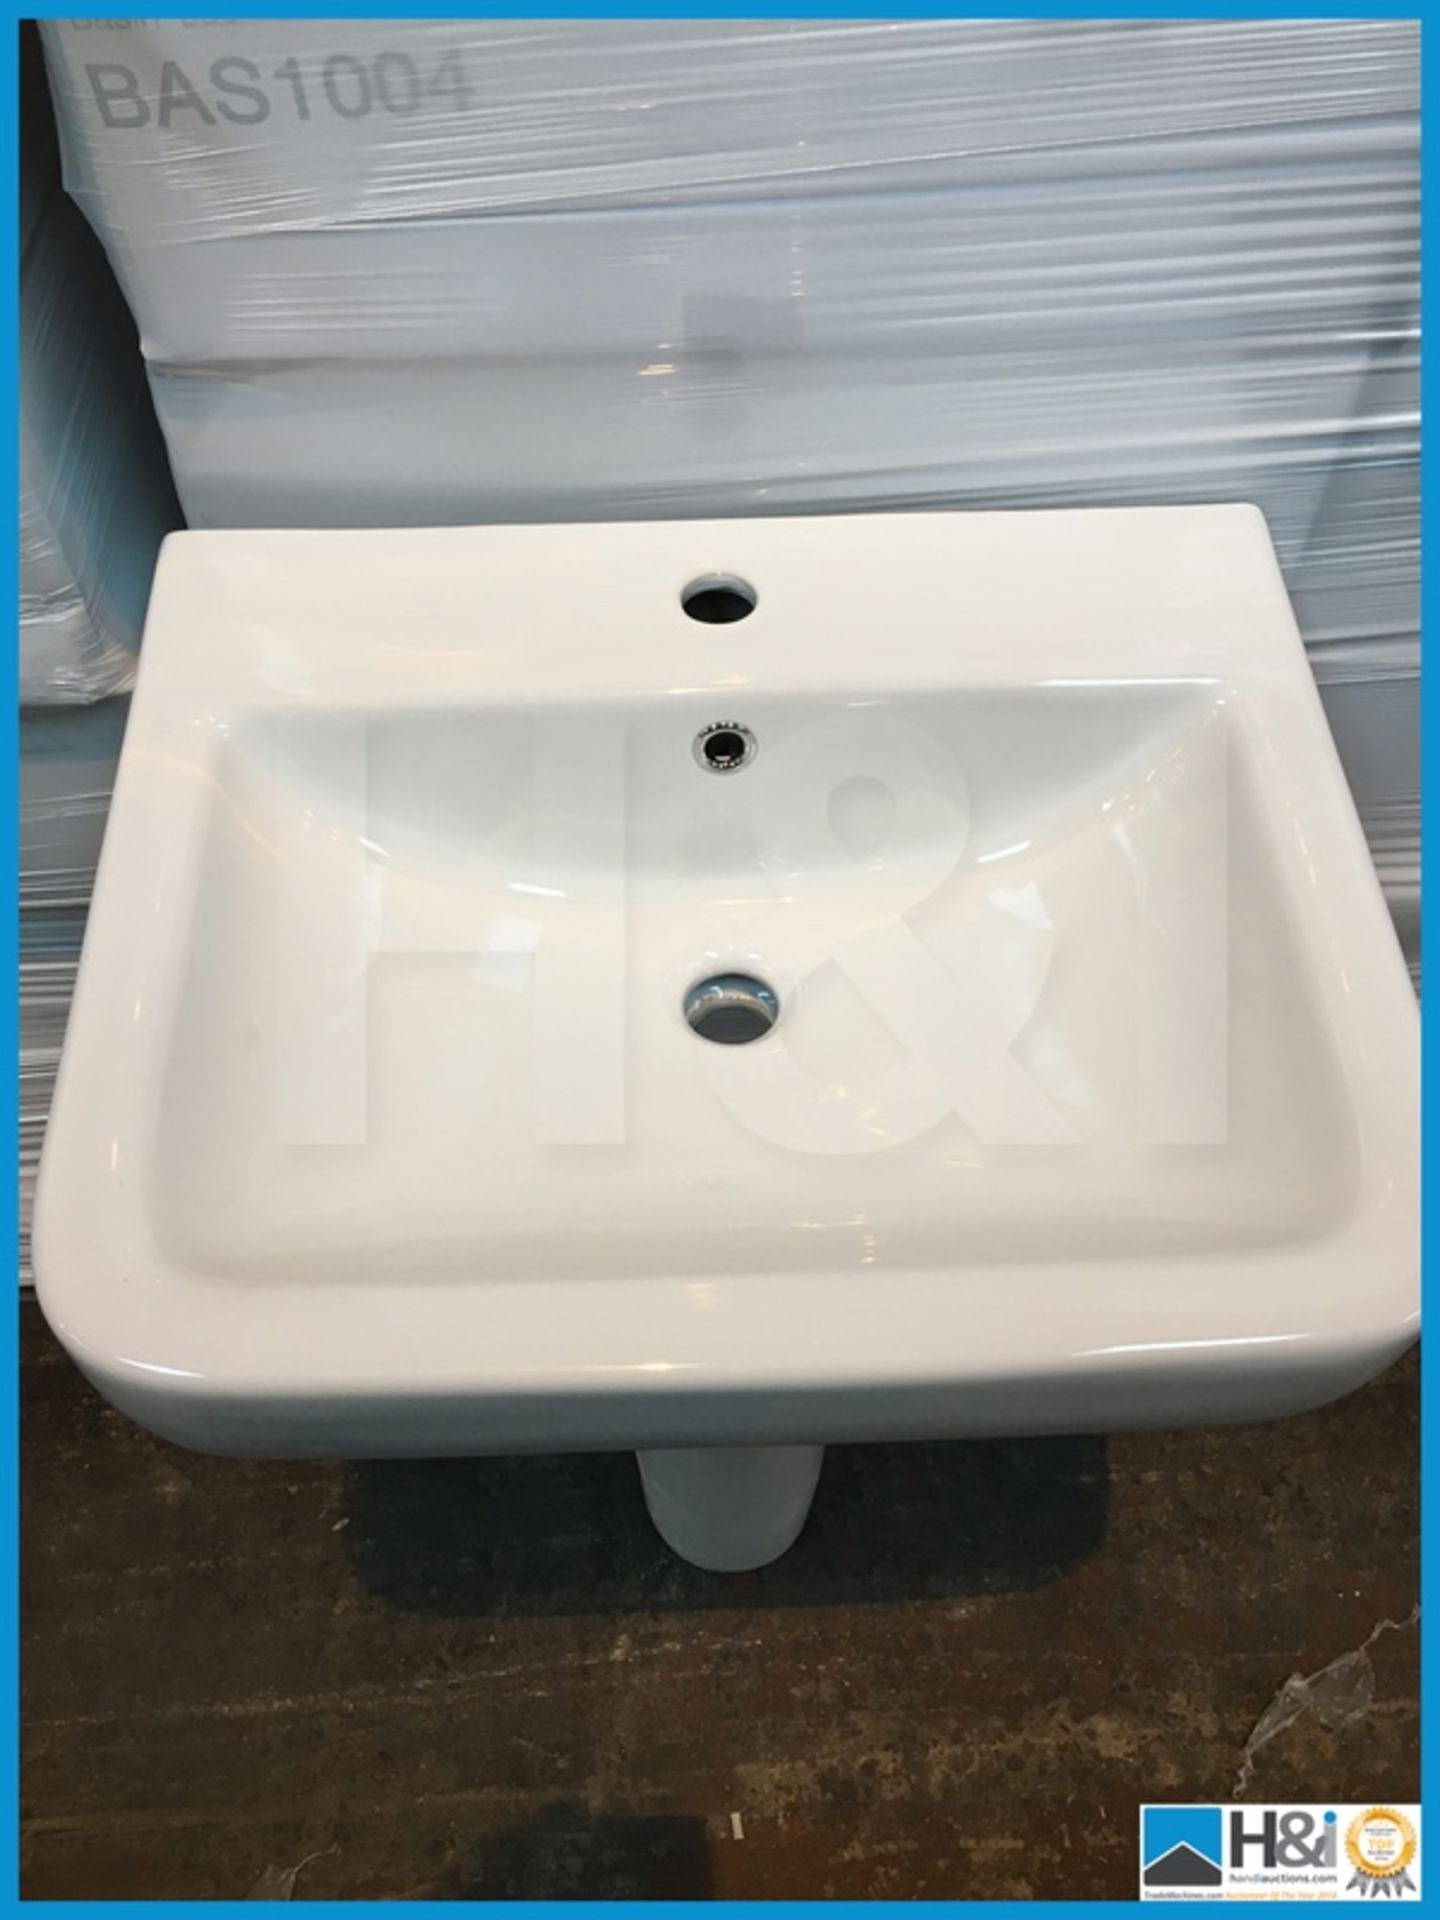 Victoria Plumb 550mm Diarra Large Basin Gloss White Modern Bathroom Sink RRP £99.99. This modern